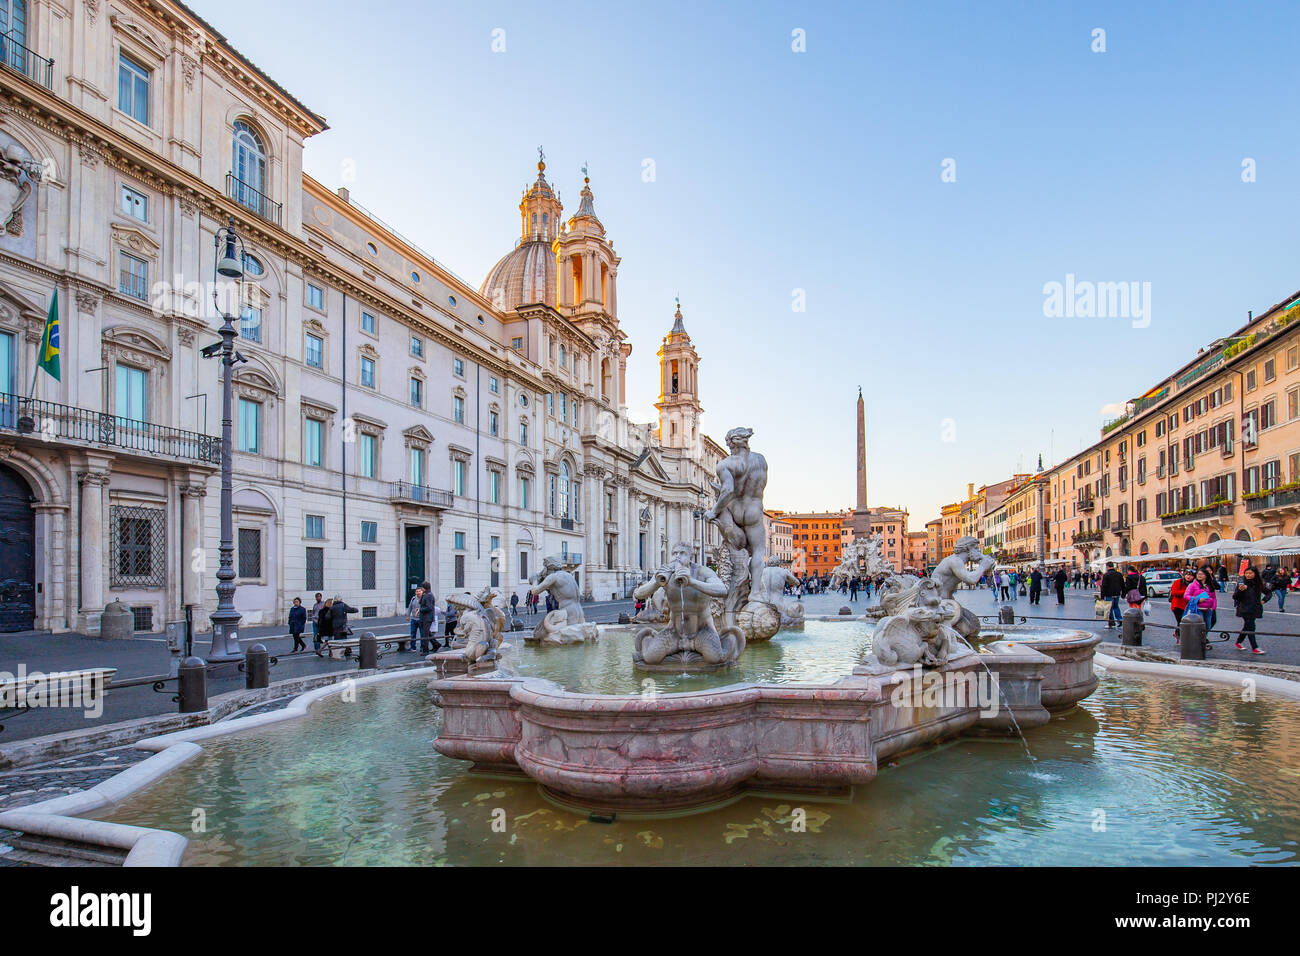 Piazza Navona square in Rome, Italy. Stock Photo